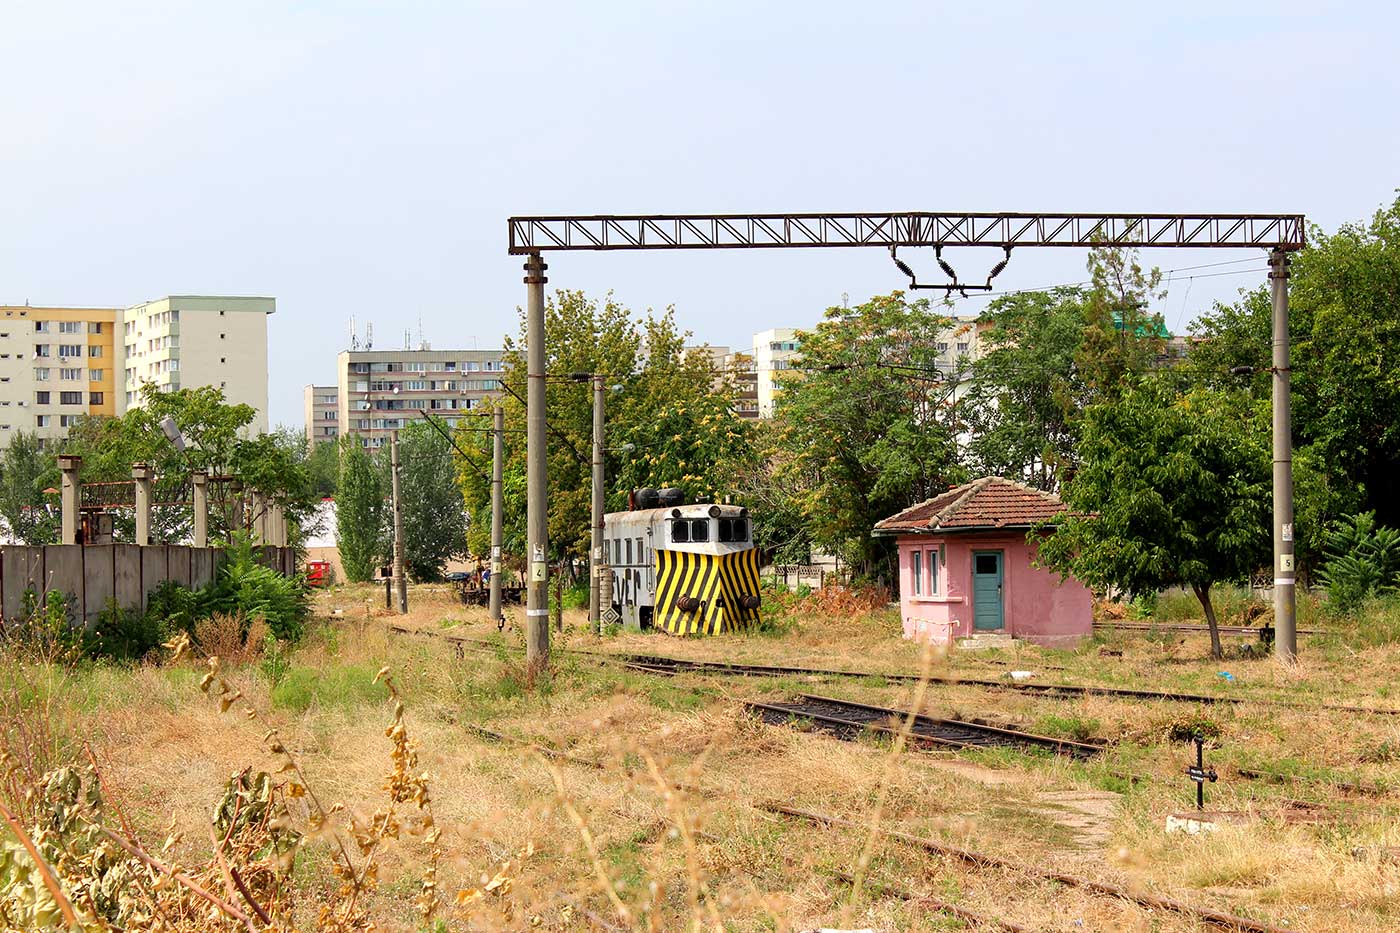 Bucharest's Abandoned Train Yard